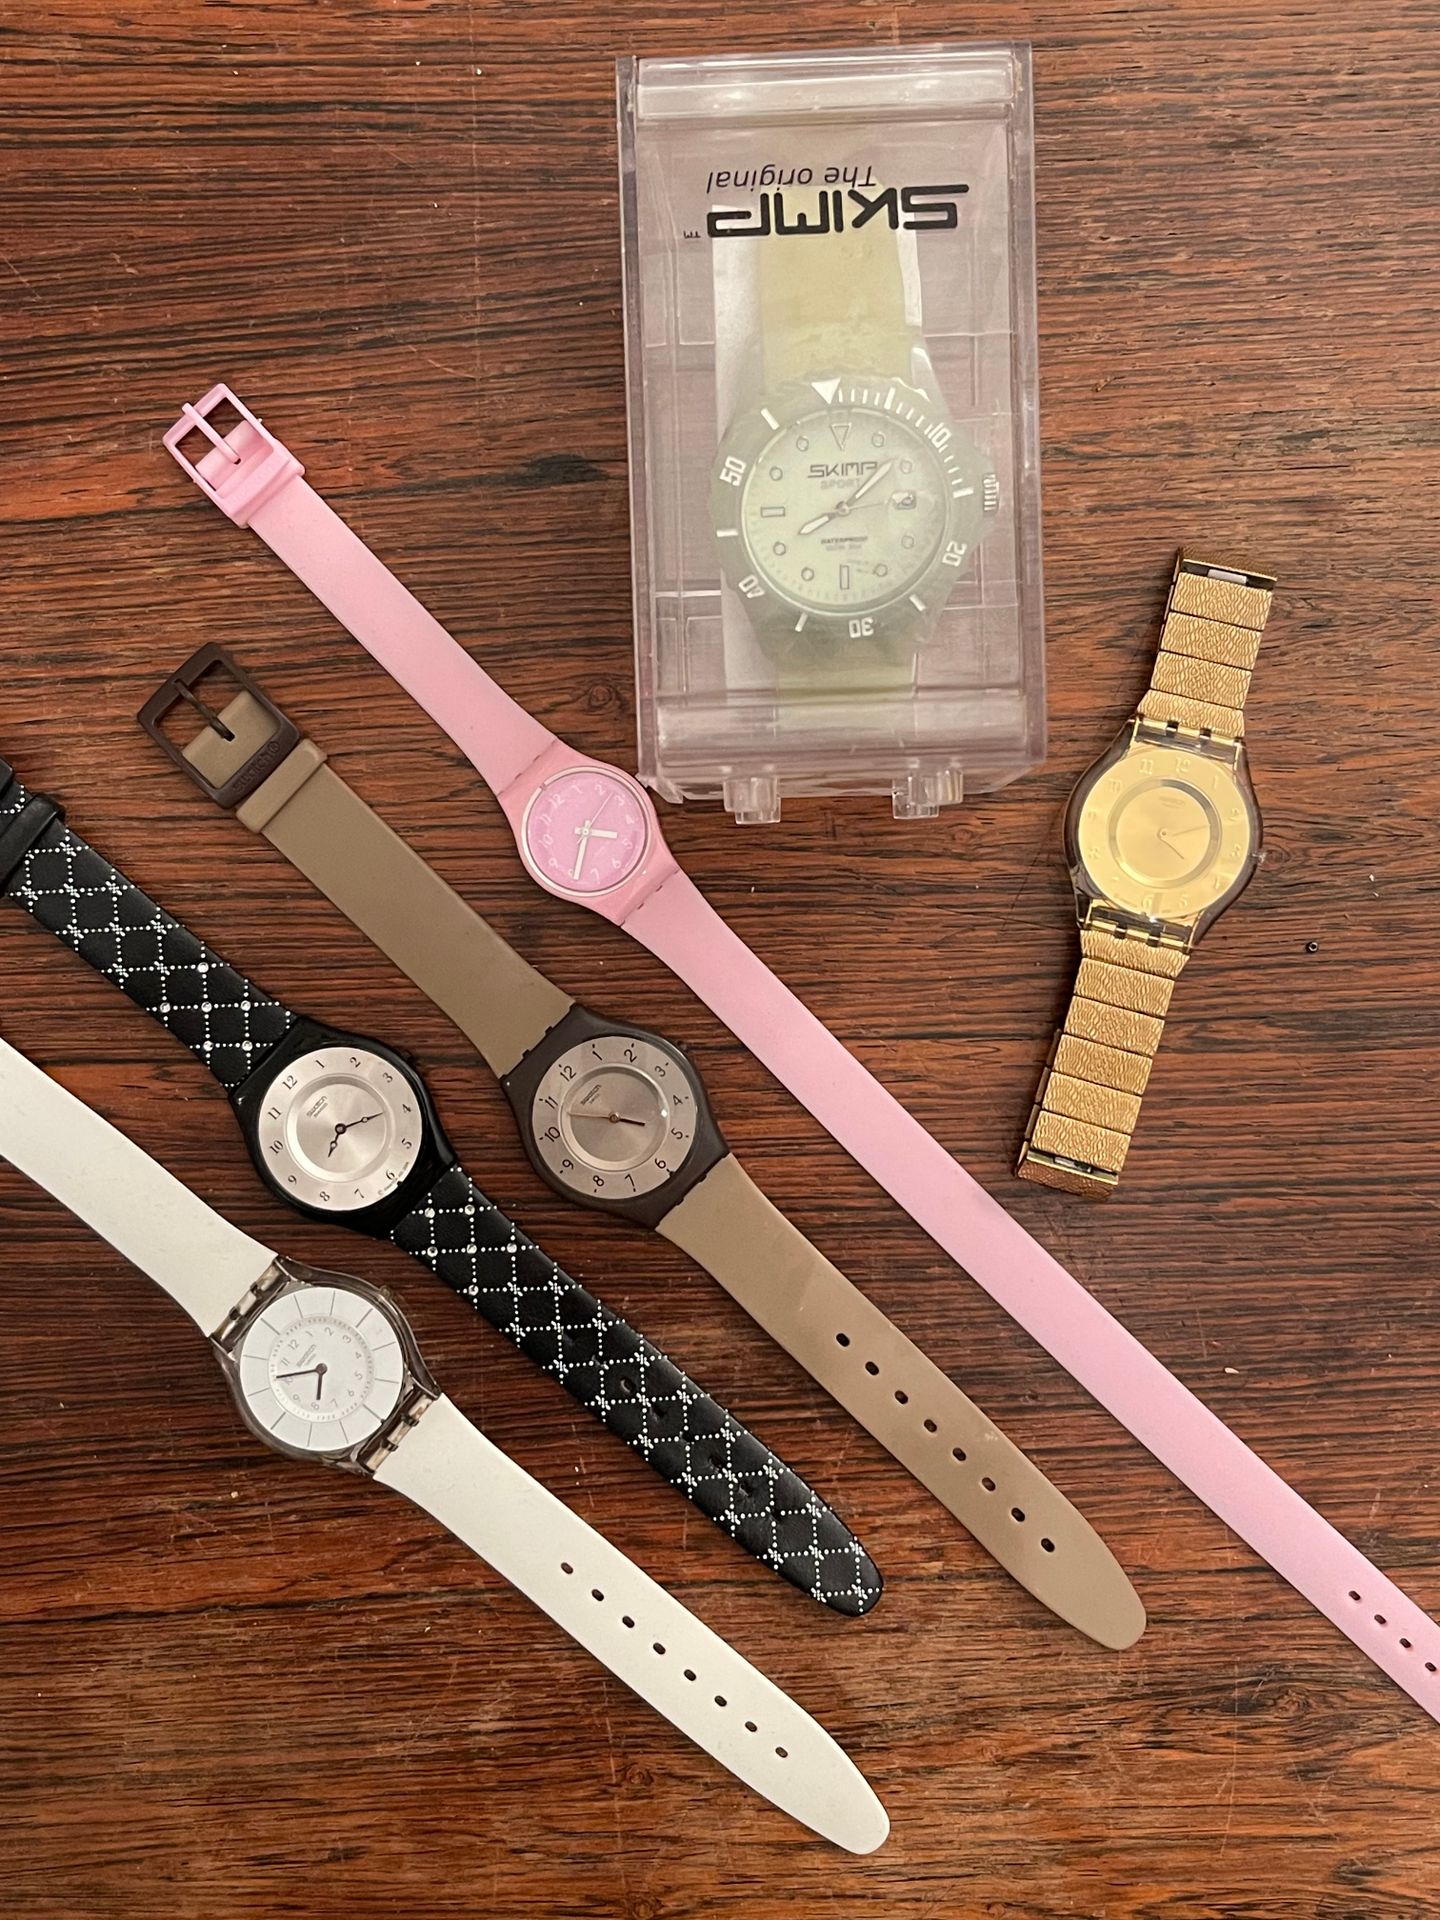 Null 一批斯沃琪手表（按原样）。附上一块Skimp运动手表及其包装盒。